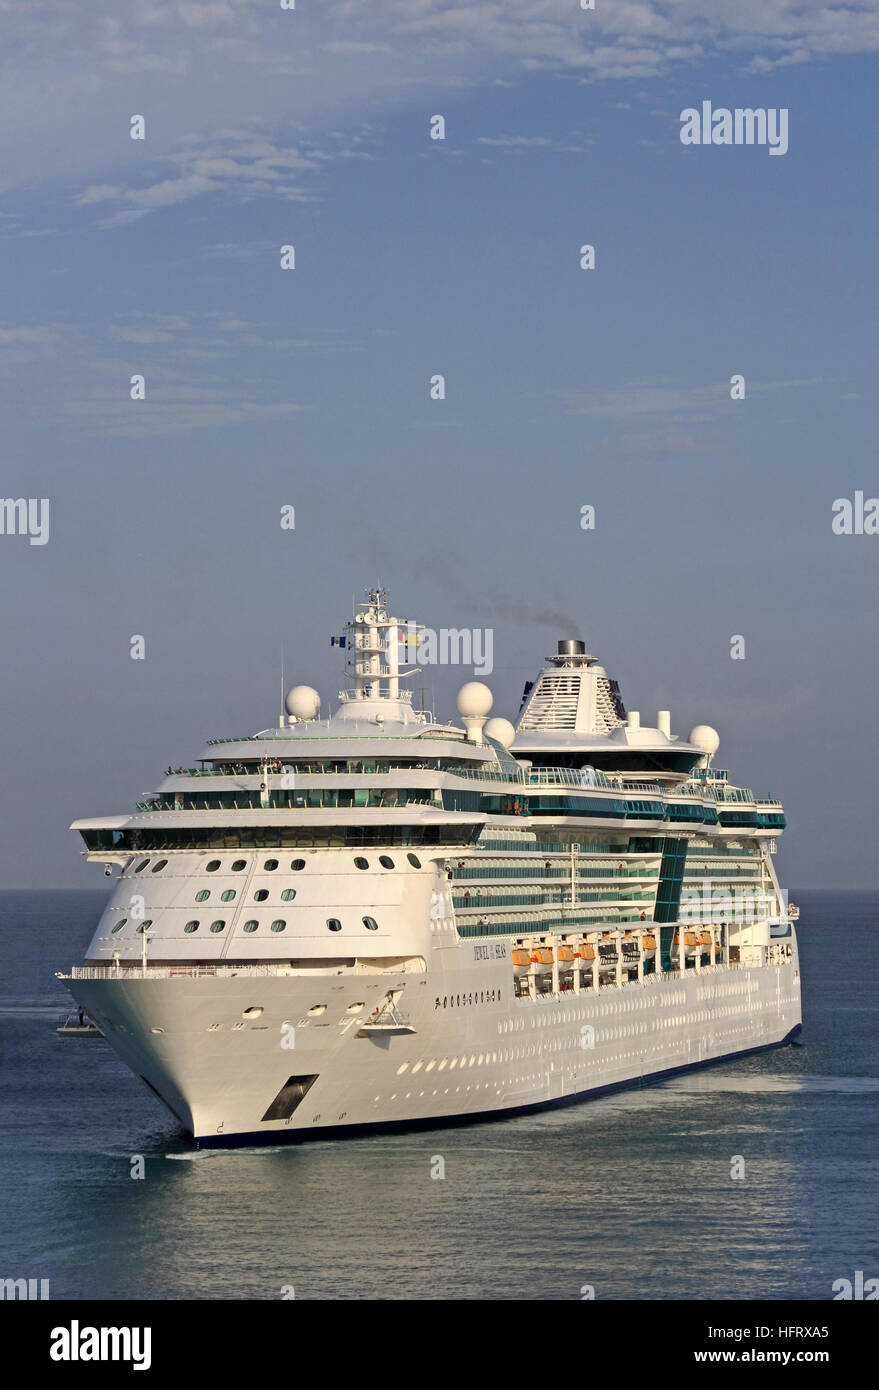 Royal Caribbean International Cruise ship 'Jewel of the Seas' entering harbour, Bridgetown, Barbados Stock Photo